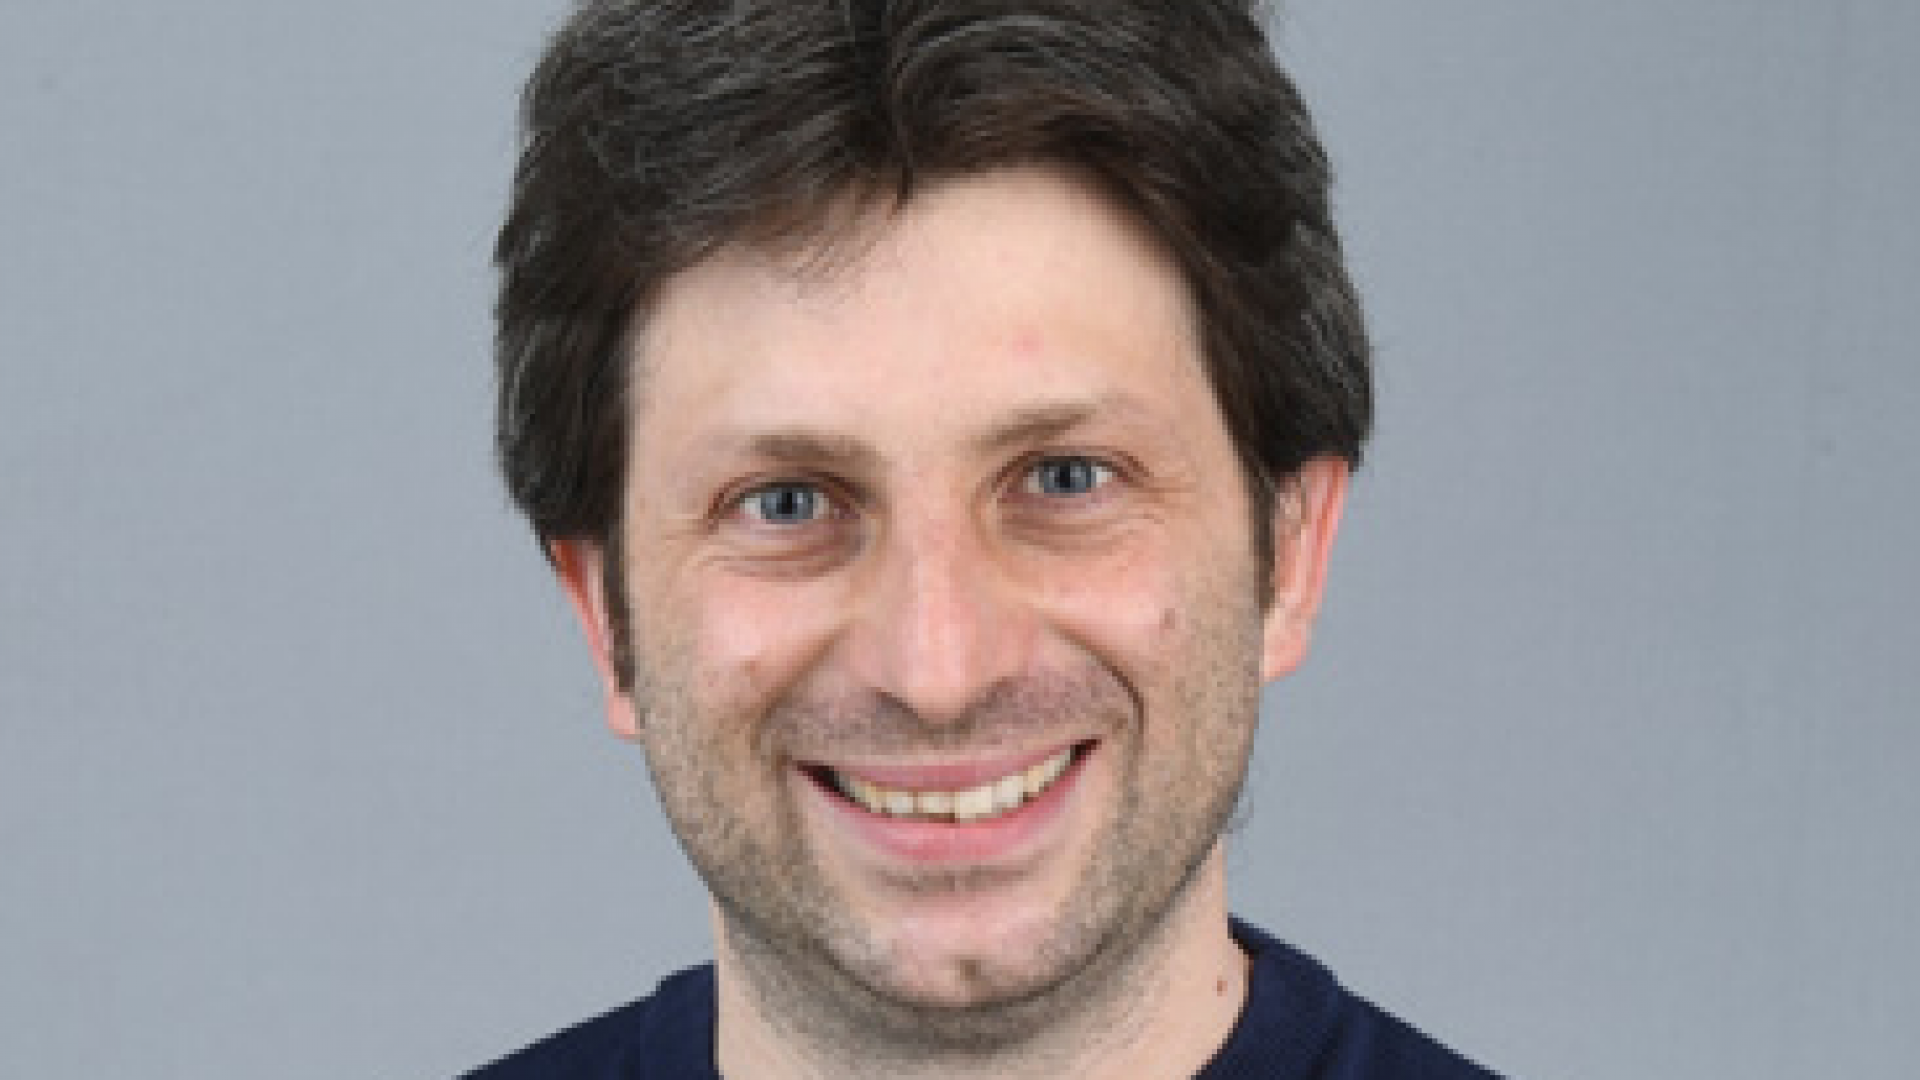 Professor, Dr. Nicola Segata